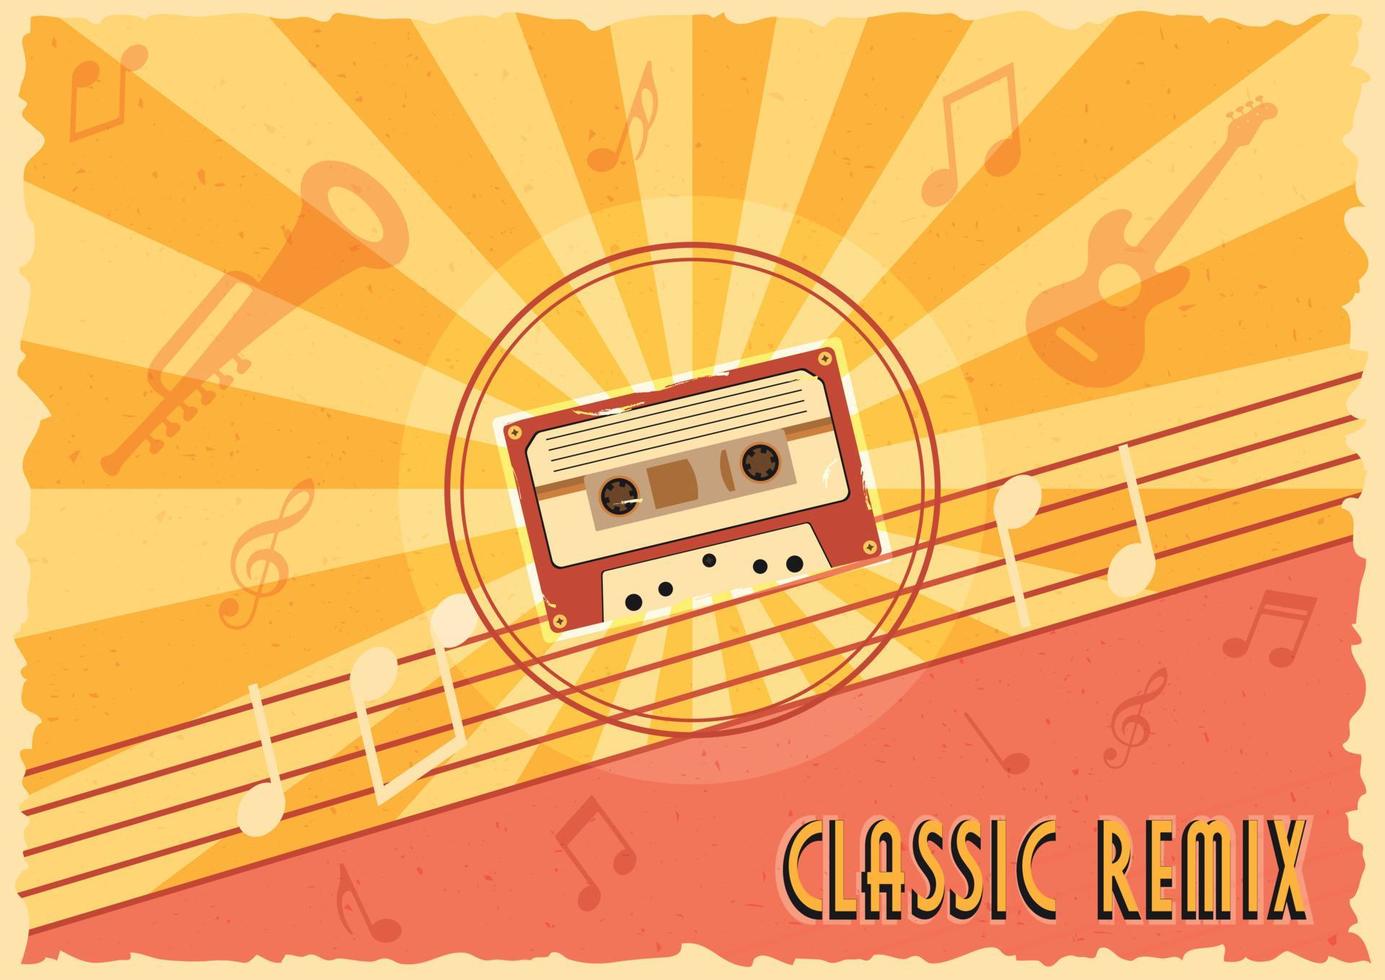 antiguo fondo musical vintage. cinta antigua, guitarra, trompeta, notas musicales ilustración vectorial vector